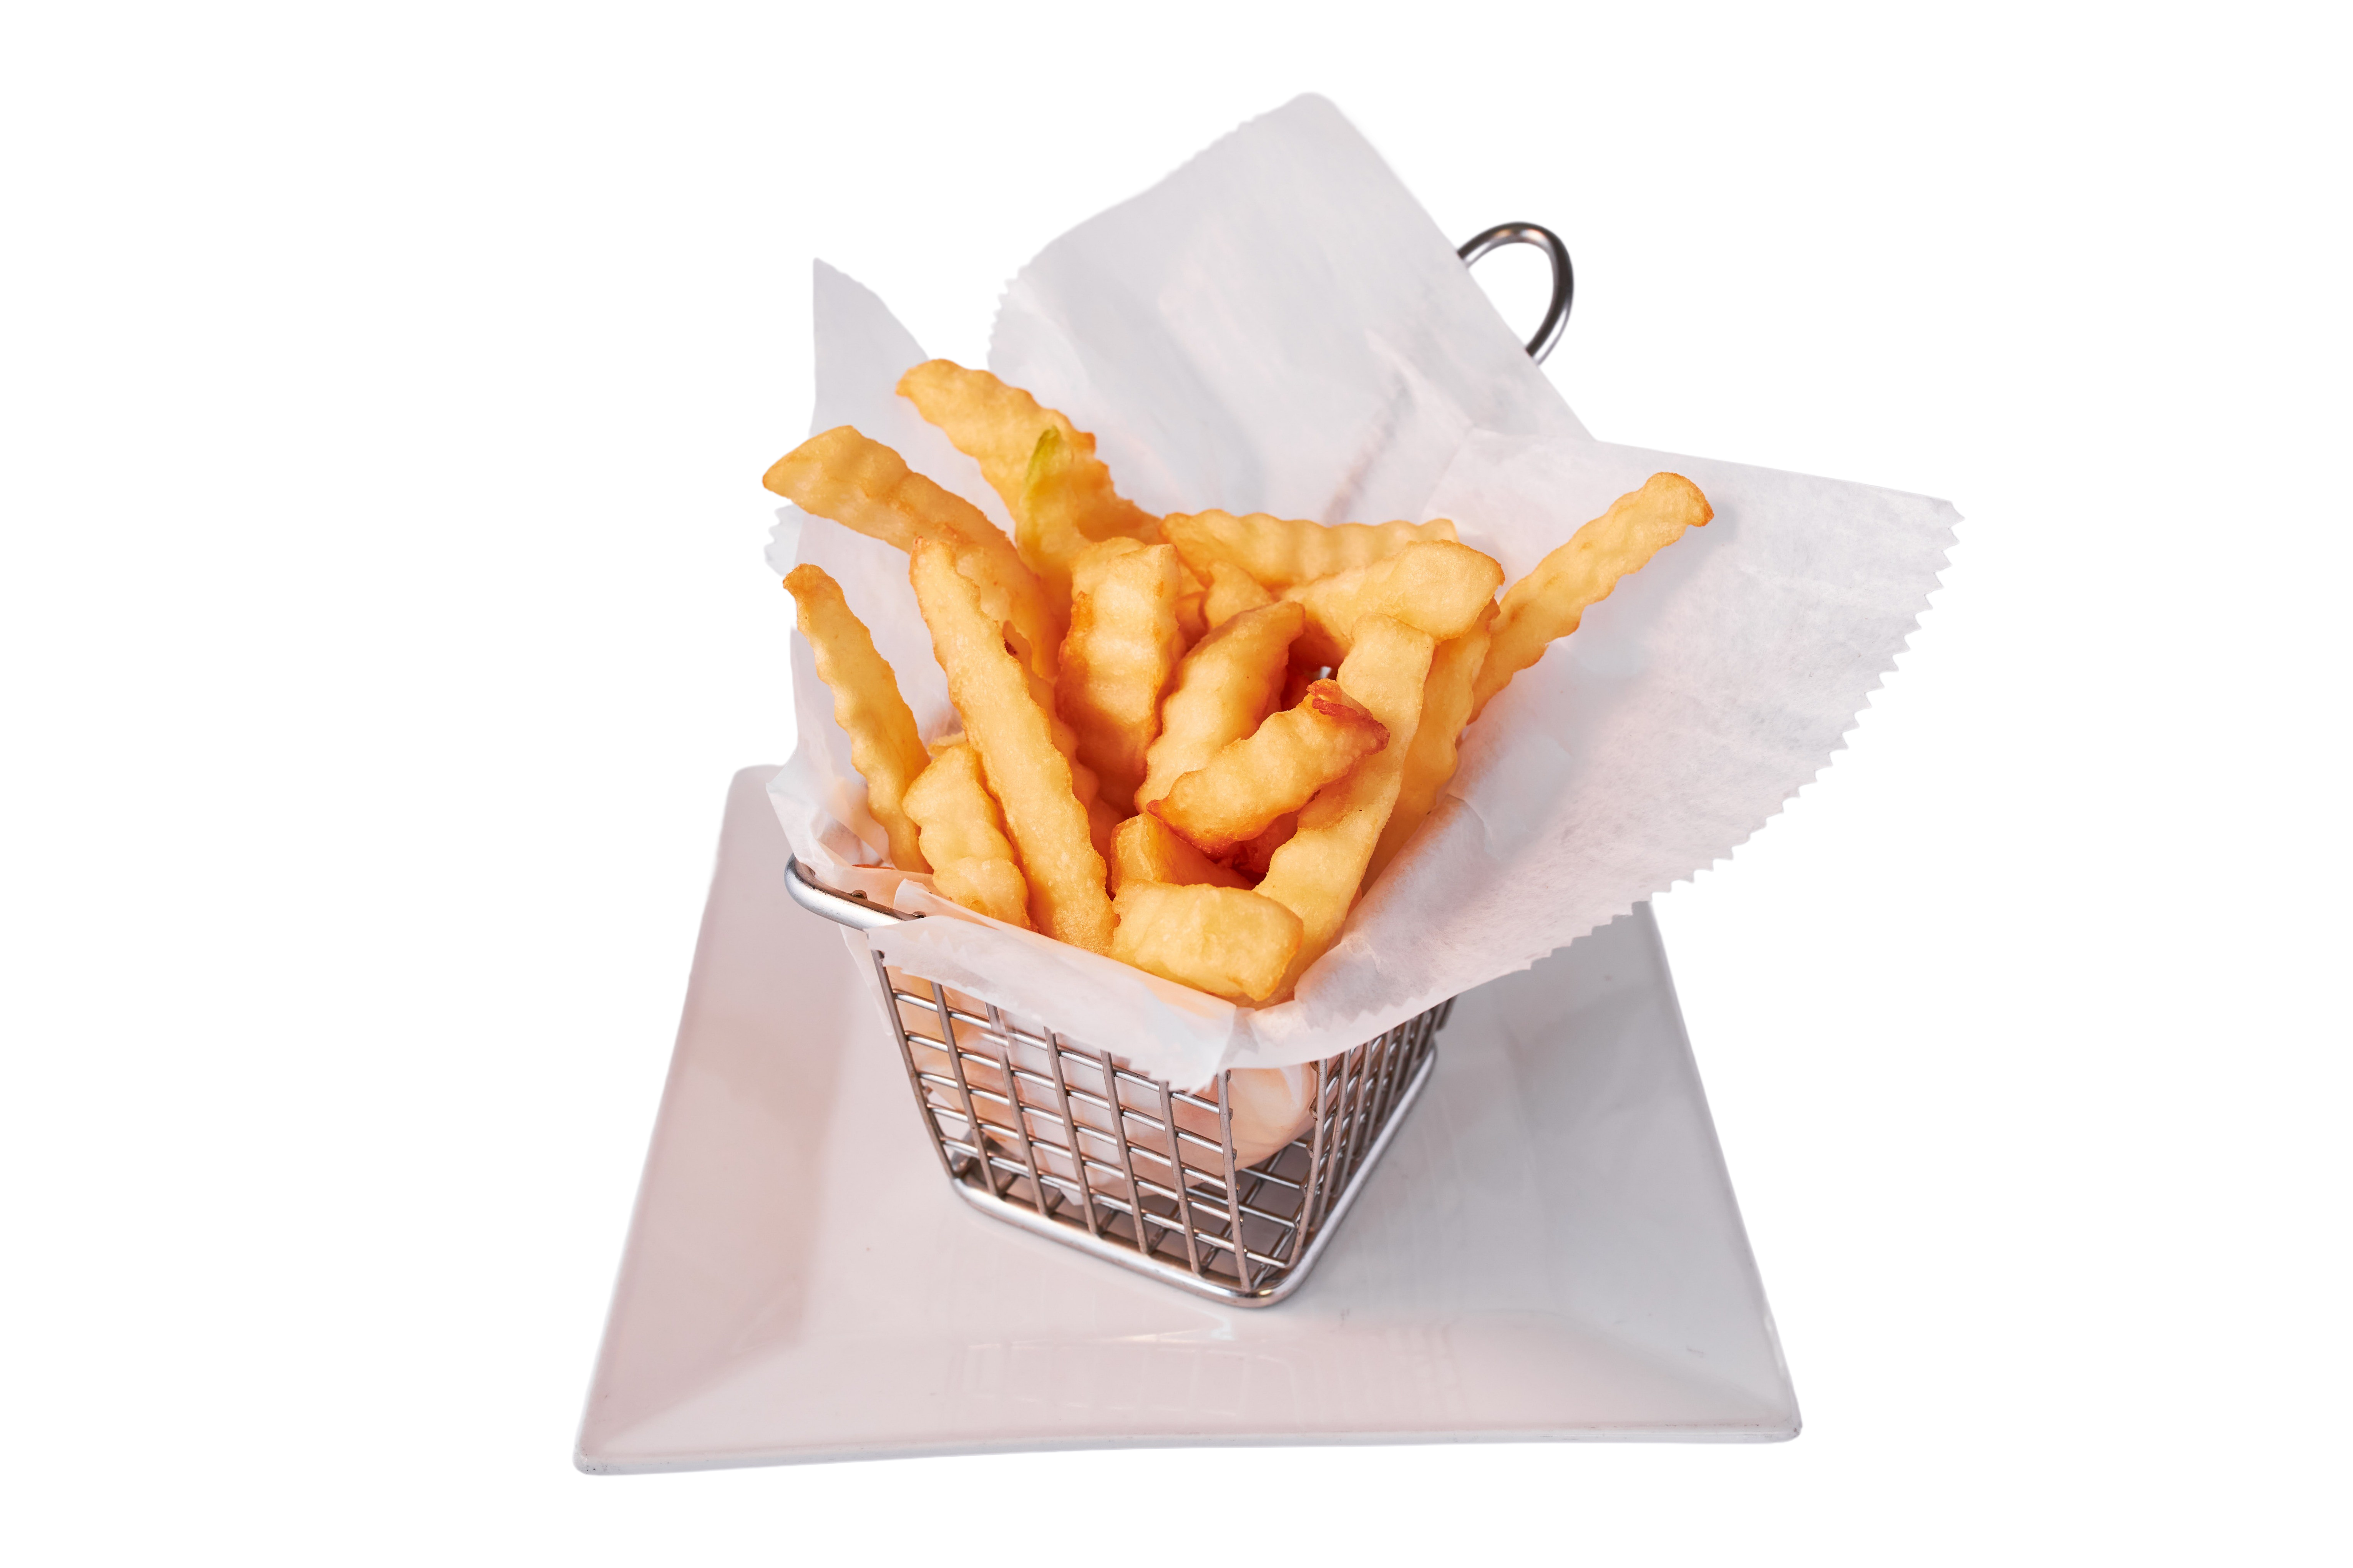 Amazon.com: Andy Capp's Big Bag Cheddar Flavored Fries, 8 oz, 8 Pack